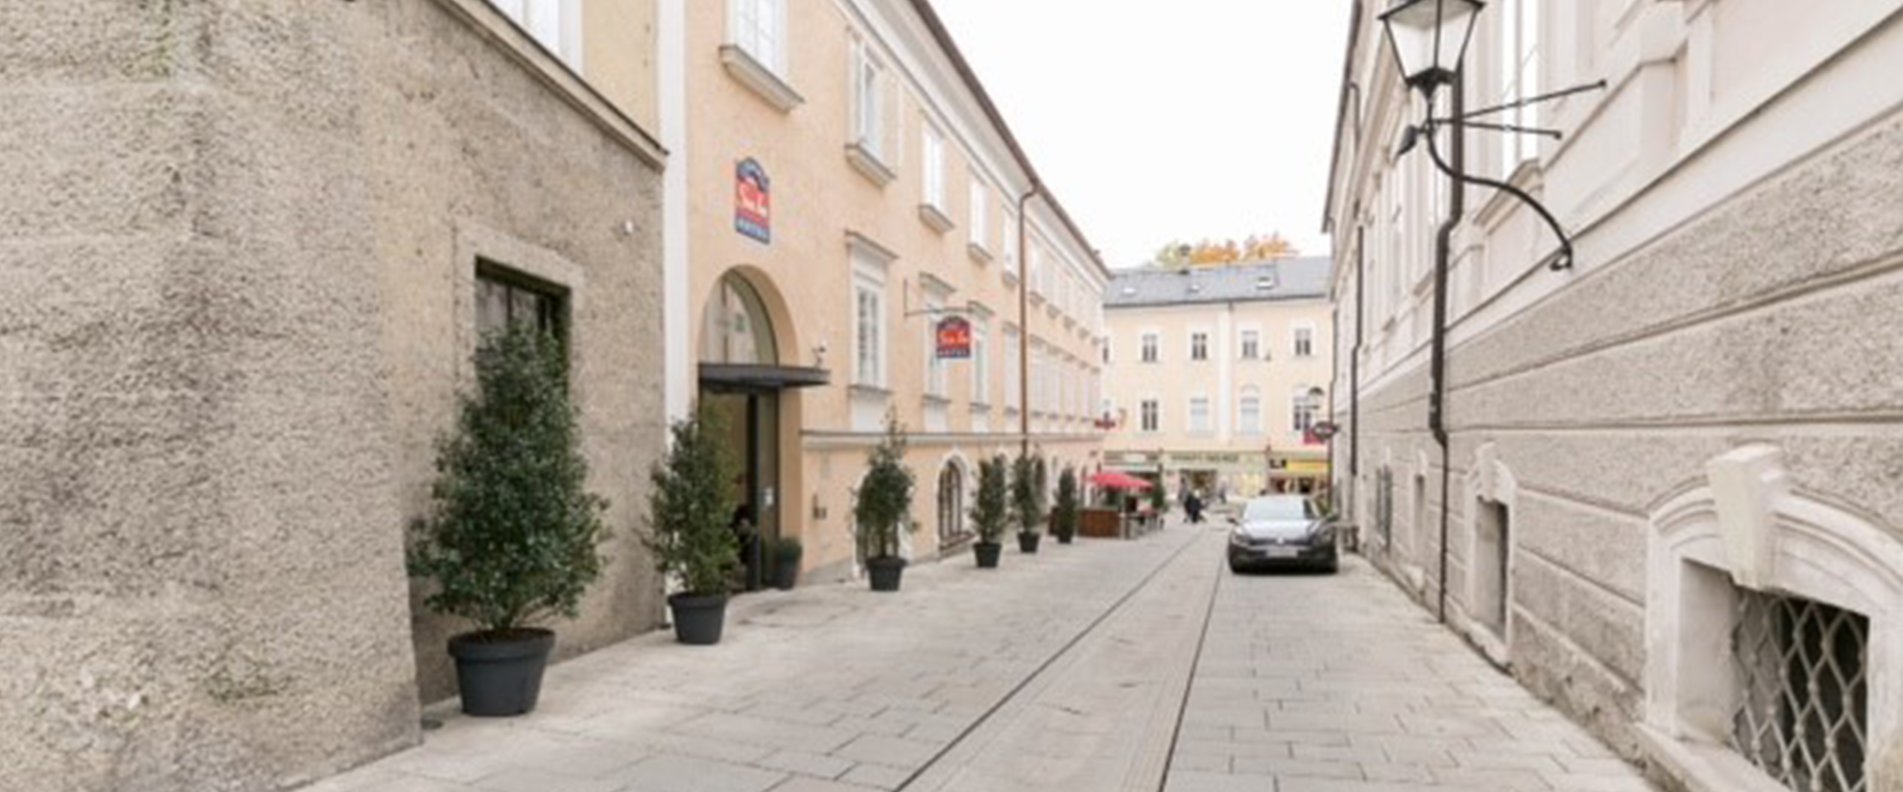 Altstadt Salzburg Star Inn | © Oyster